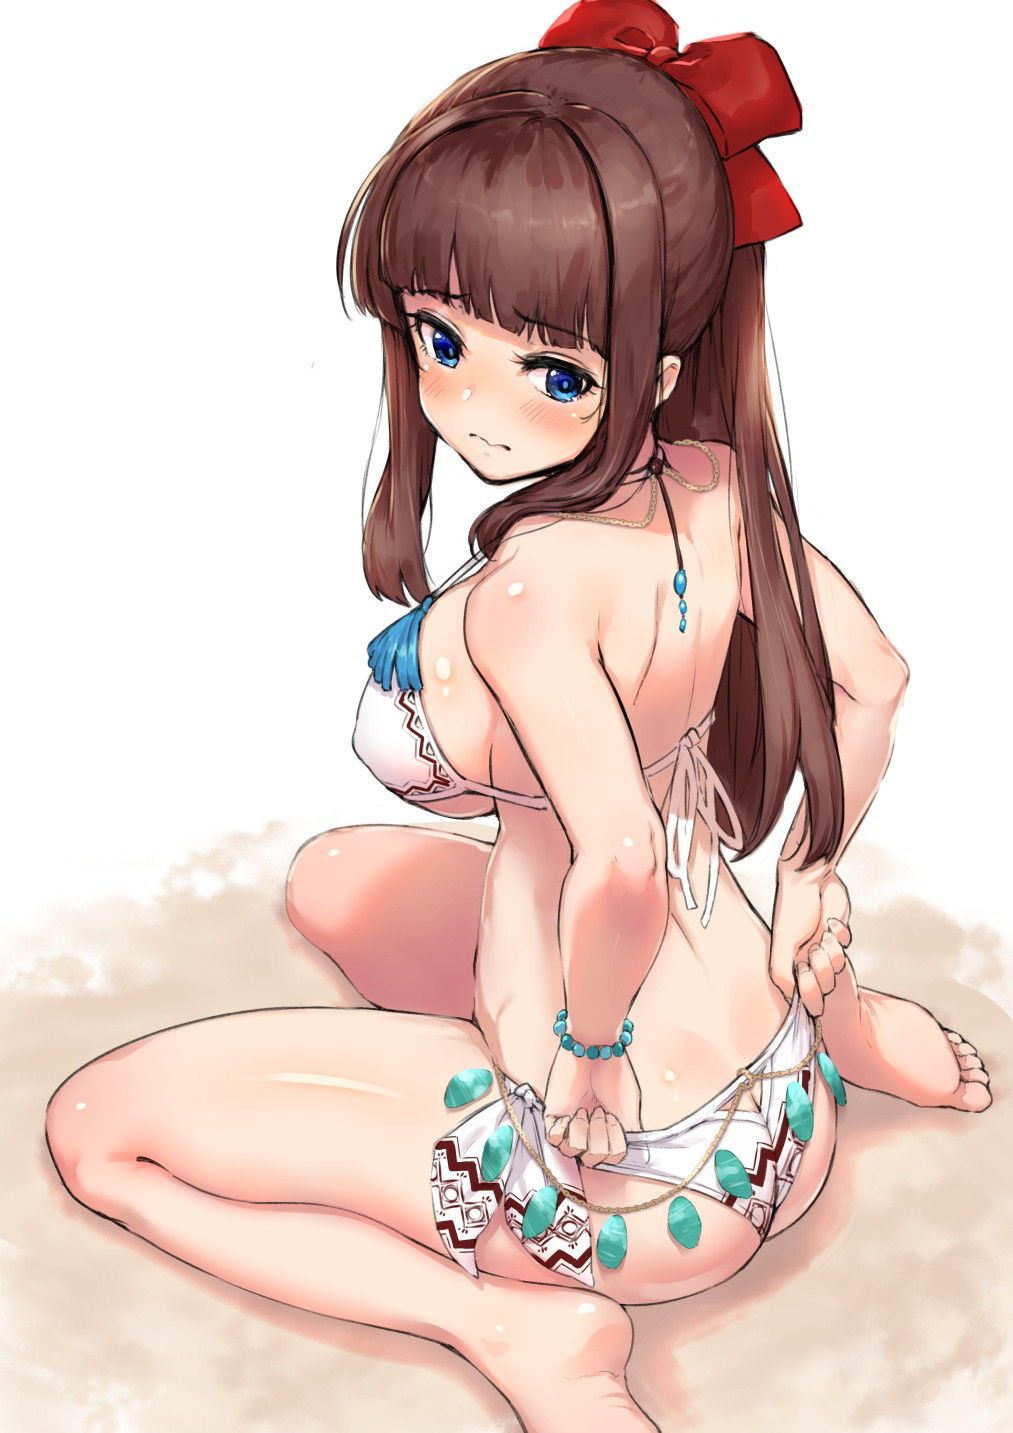 [Erotic image] NEW GAME! Unried Nuki secondary erotic image that makes you want to do H like Hifuki Takimoto manga 26